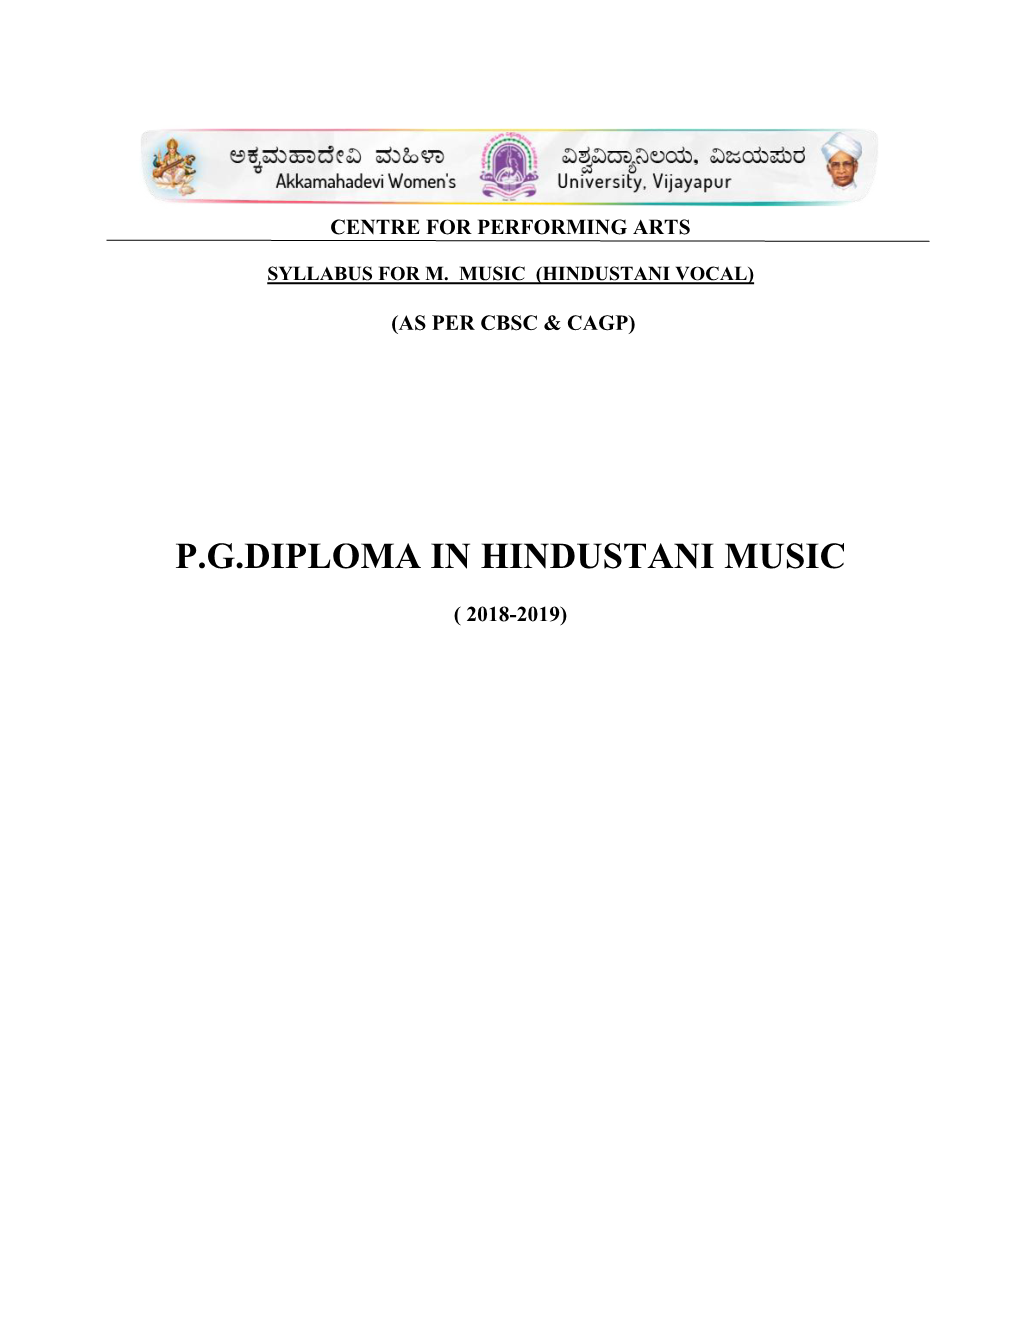 PG Diploma in Hindustani Music 2018-19 Onwards